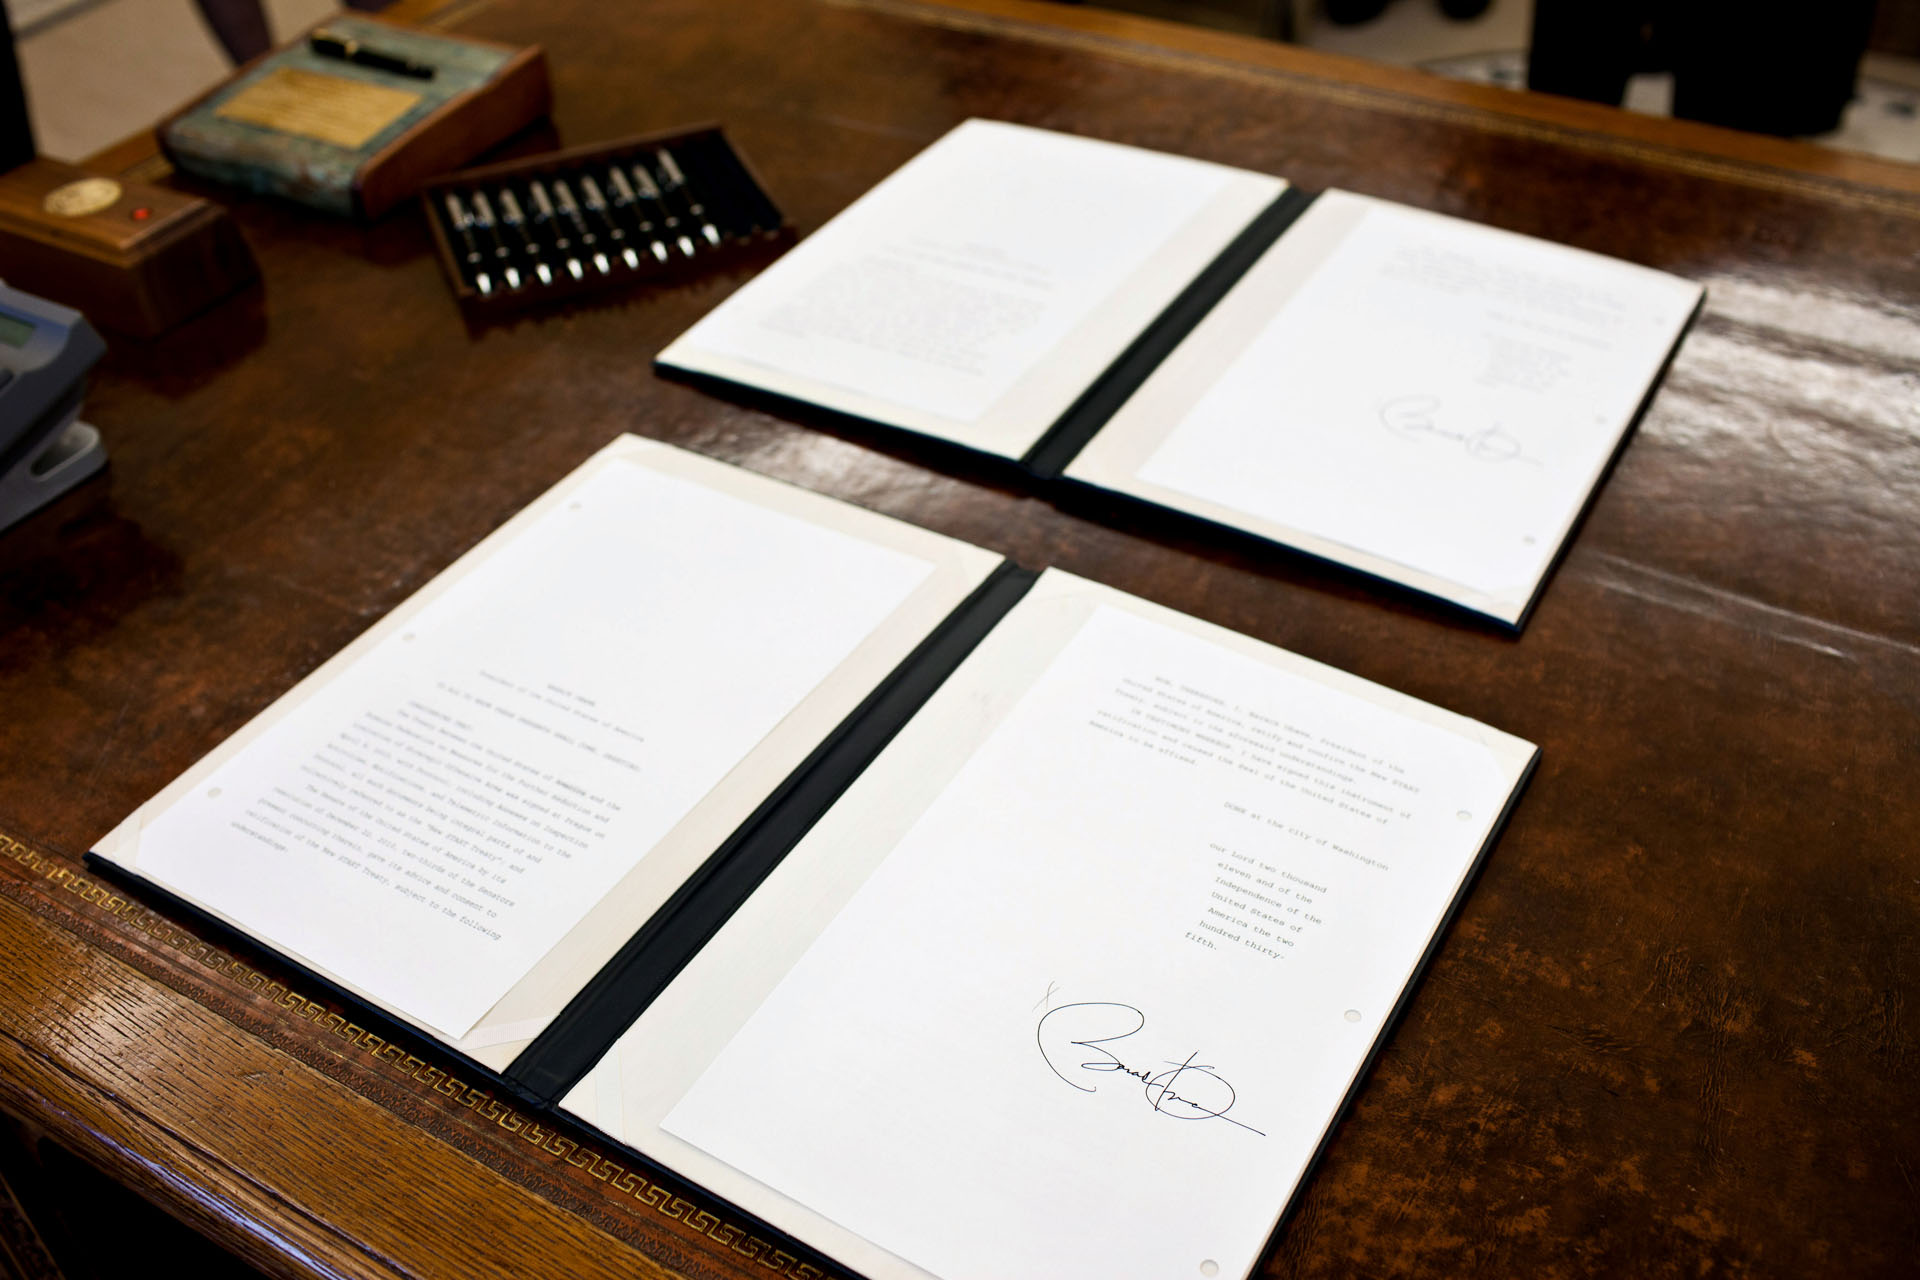 President Obama's Signature on New START Treaty